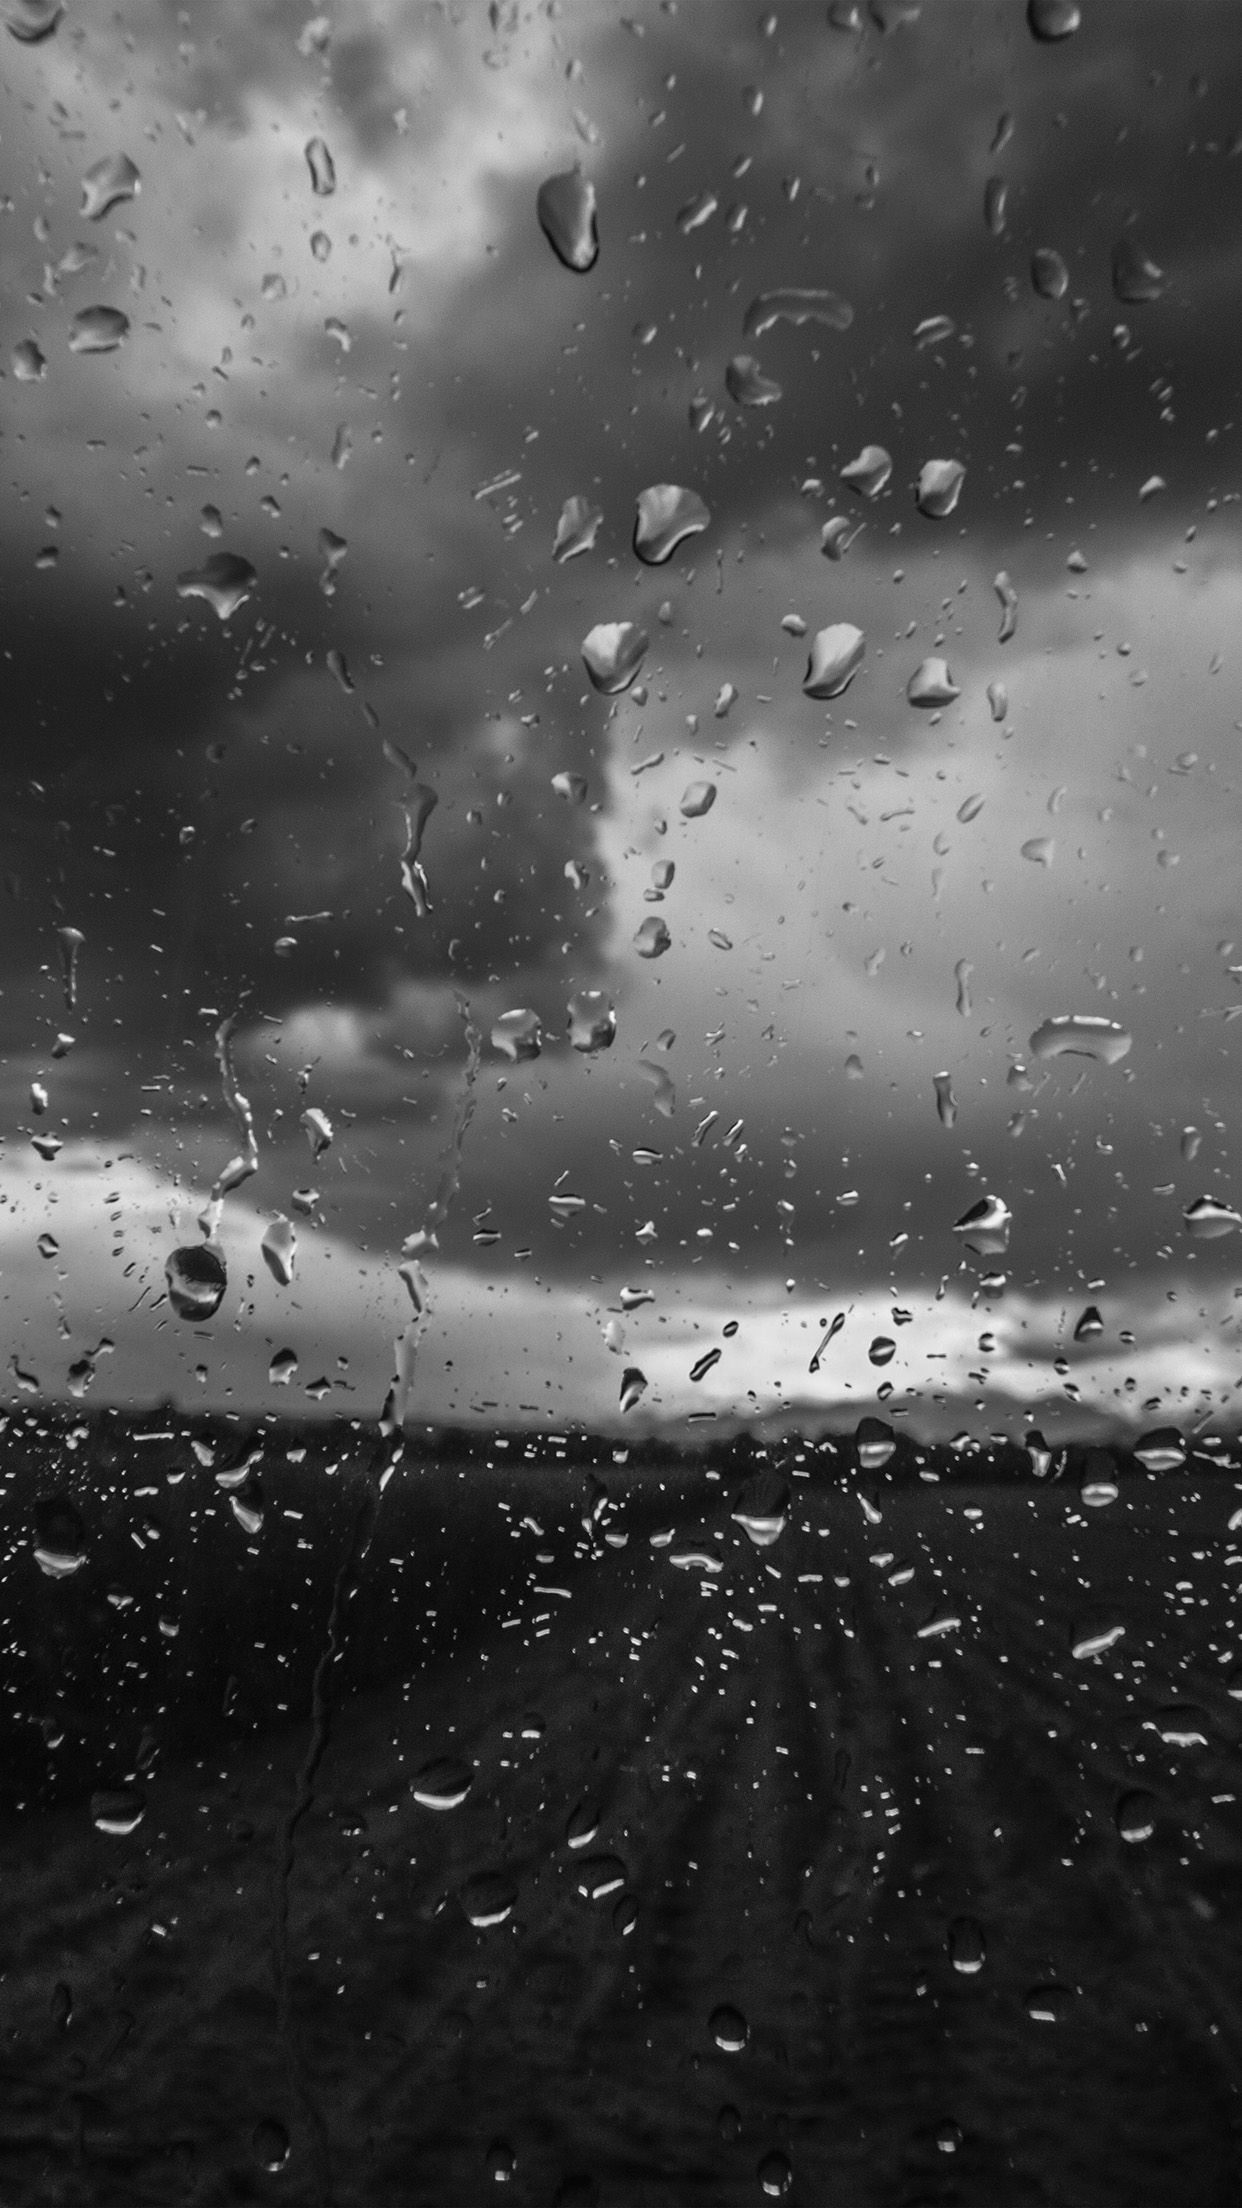 iPhone X wallpaper. rainy window nature water drop road dark bw